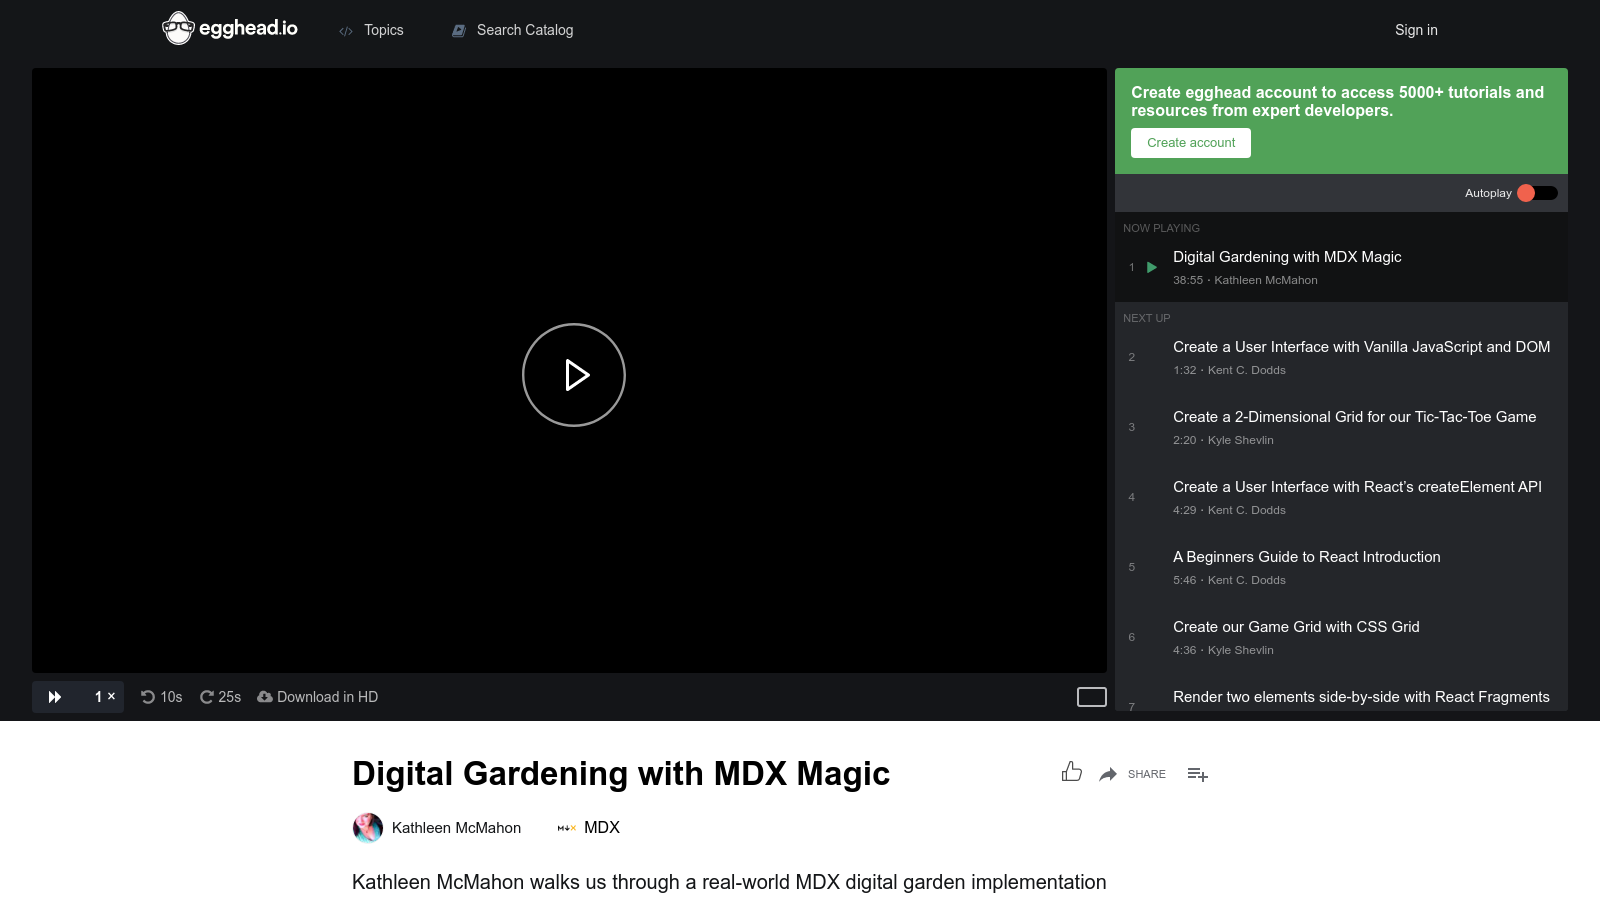 Digital Gardening with MDX Magic